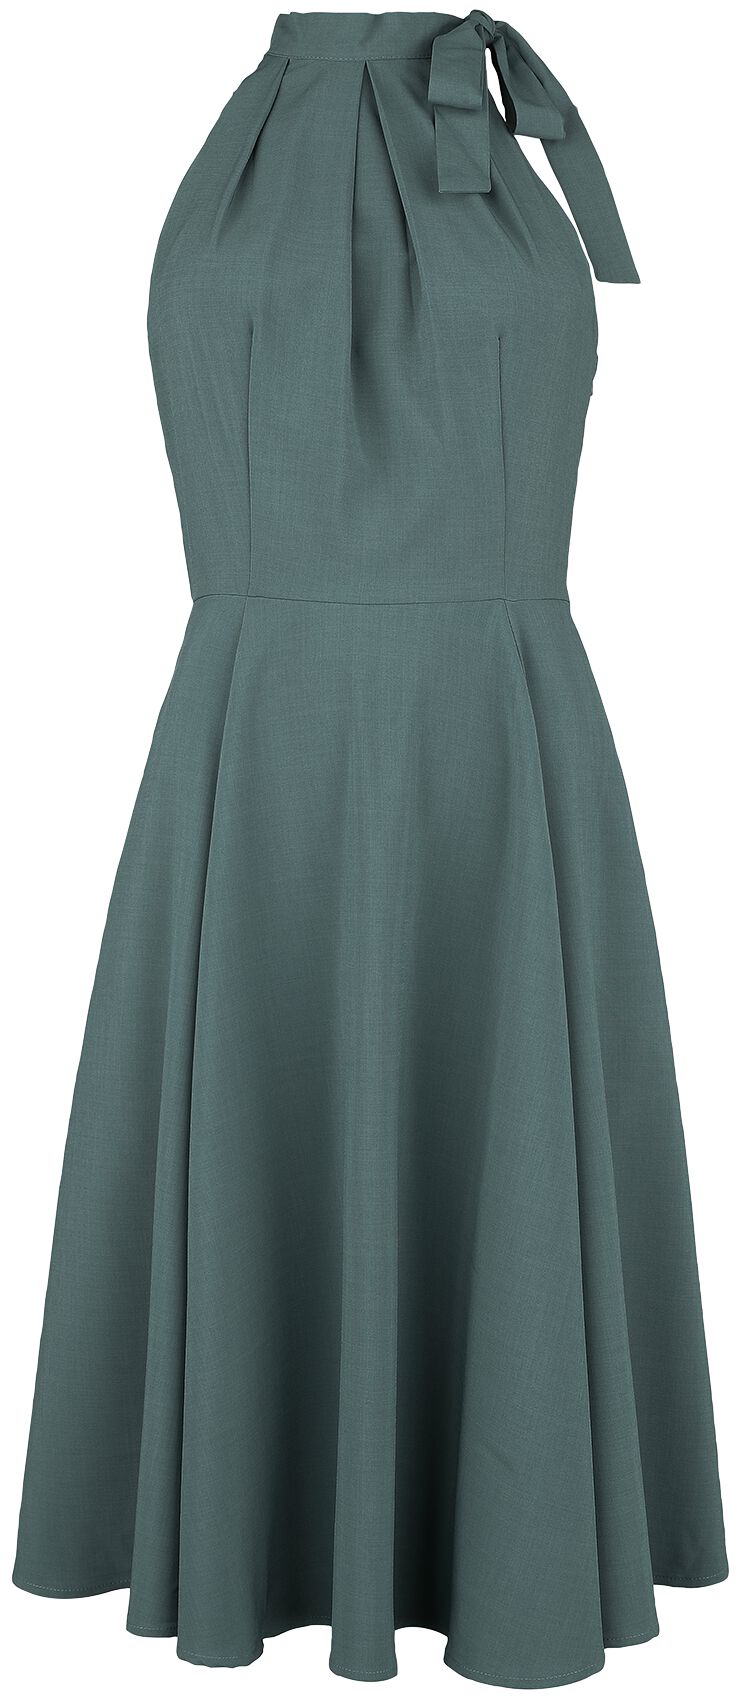 H&R London - Rockabilly Kleid knielang - Kira Swing Dress - XS bis XXL - für Damen - Größe L - grün